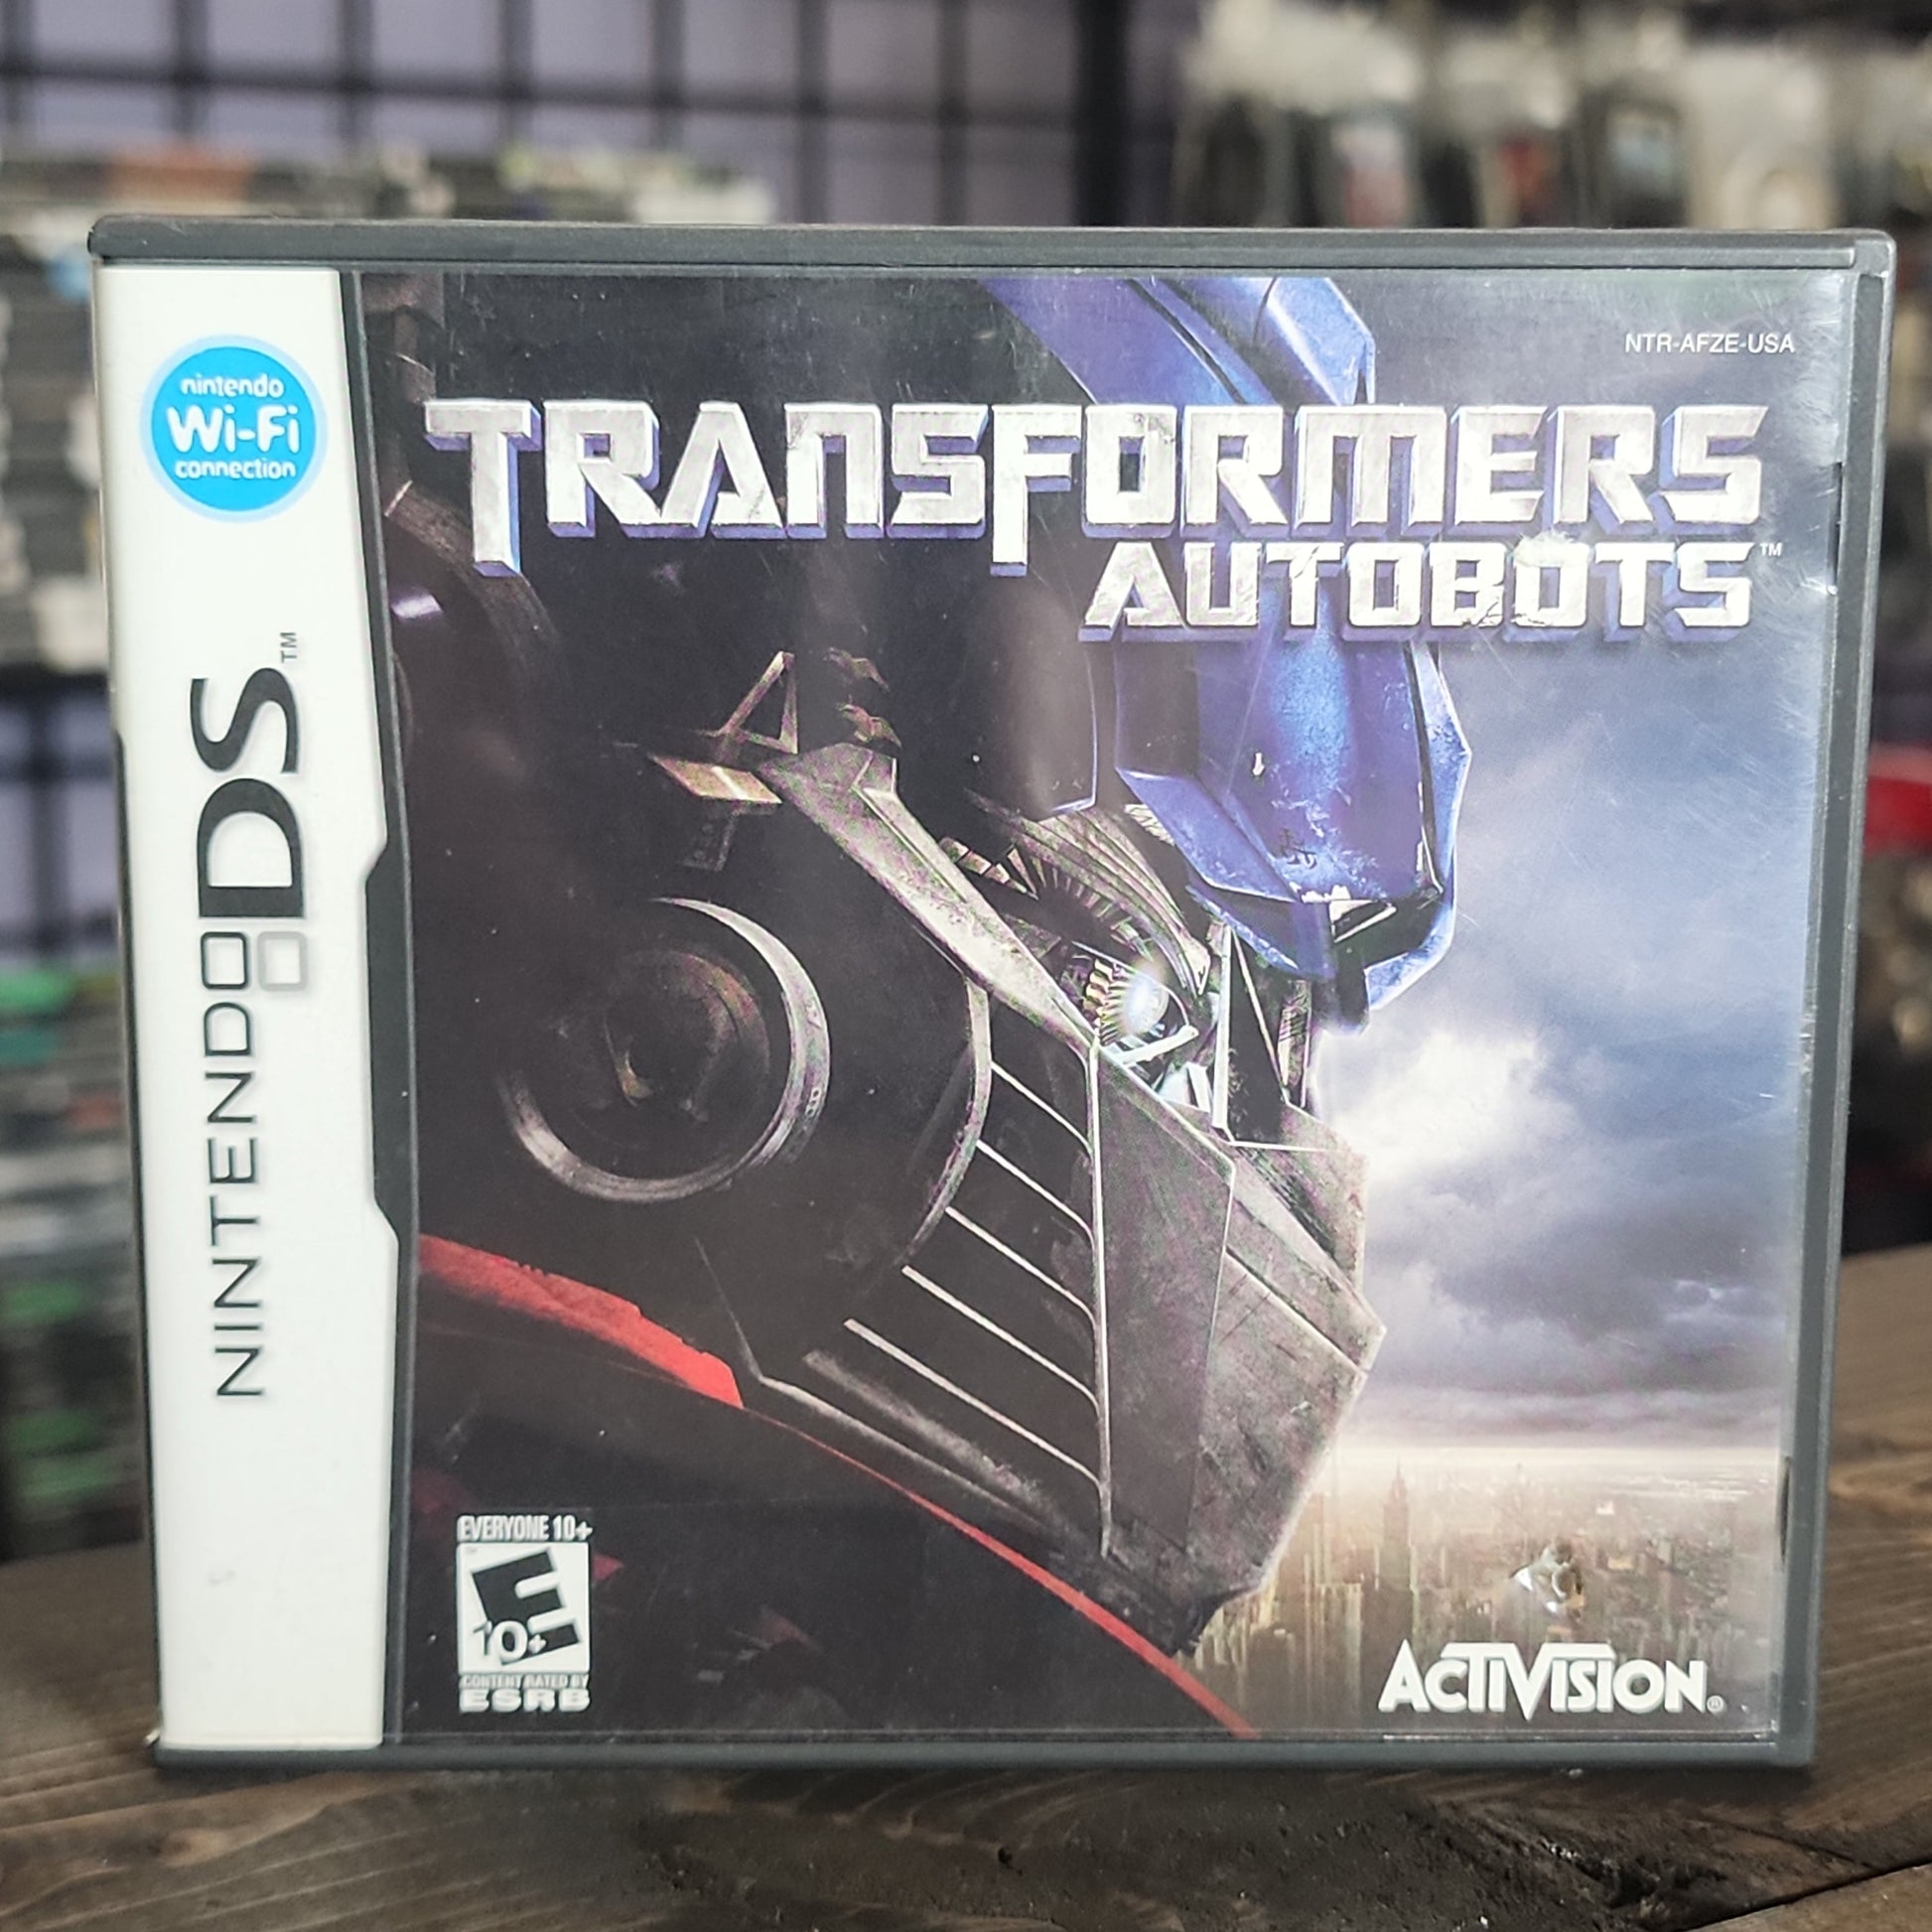 Nintendo DS - Transformers Autobots Retrograde Collectibles Action, Activision, Adventure, Autobots, CIB, DS, E10 Rated, Nintendo DS, Transformers Preowned Video Game 